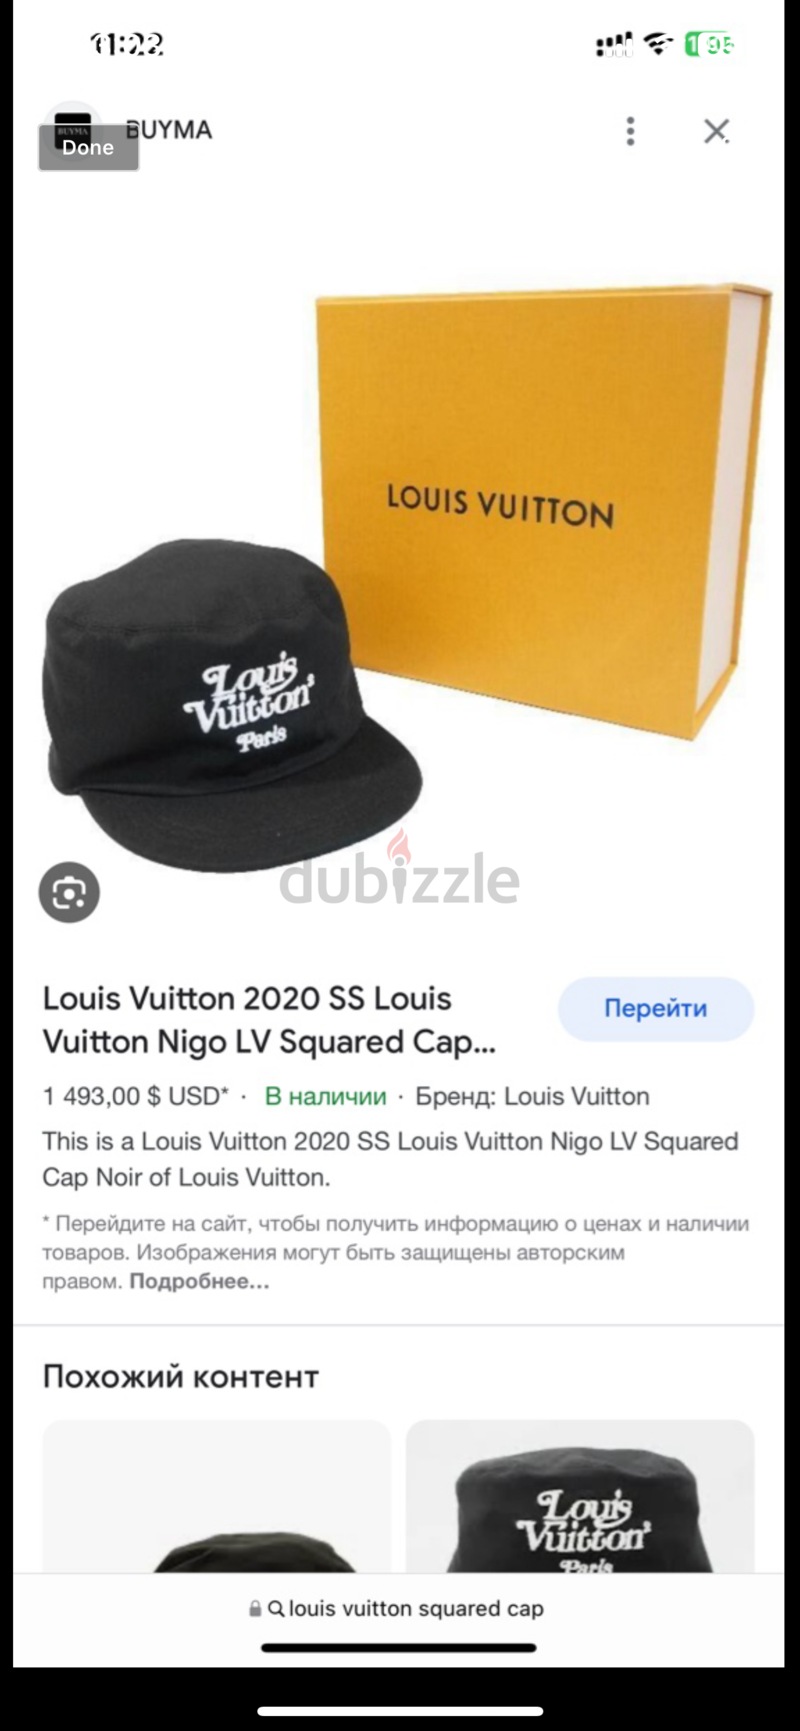 Louis Vuitton 2020 SS Louis Vuitton Nigo LV Squared Cap Noir